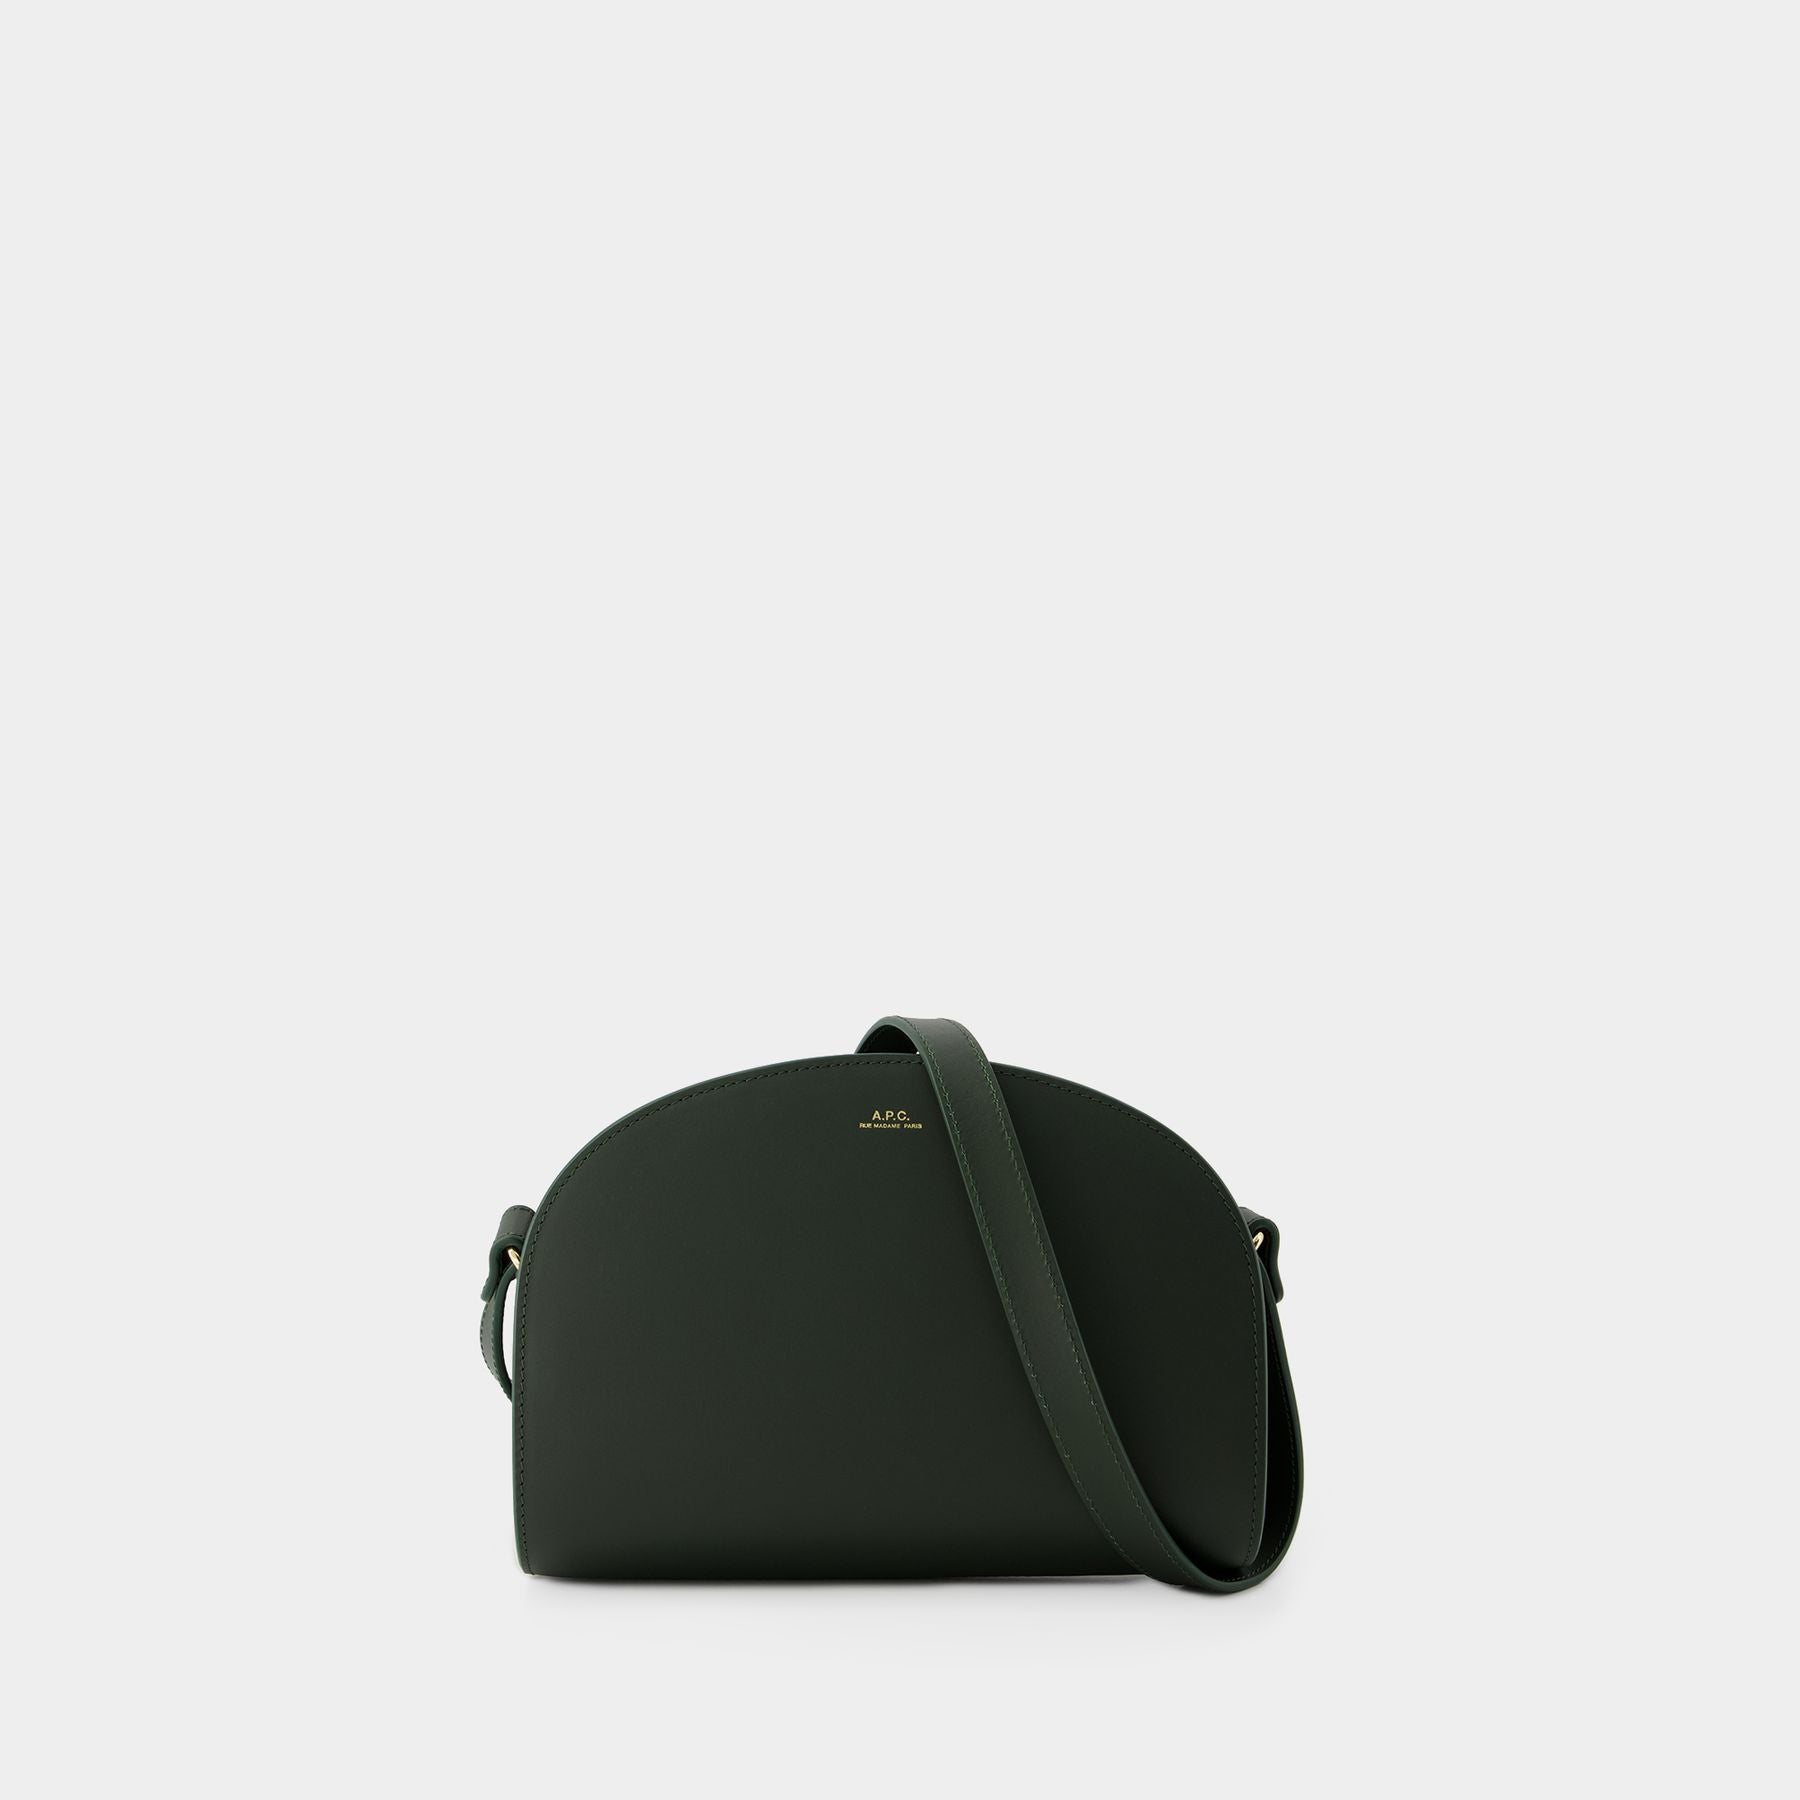 A.P.C. Demi-Lune Leather Crossbody Bag